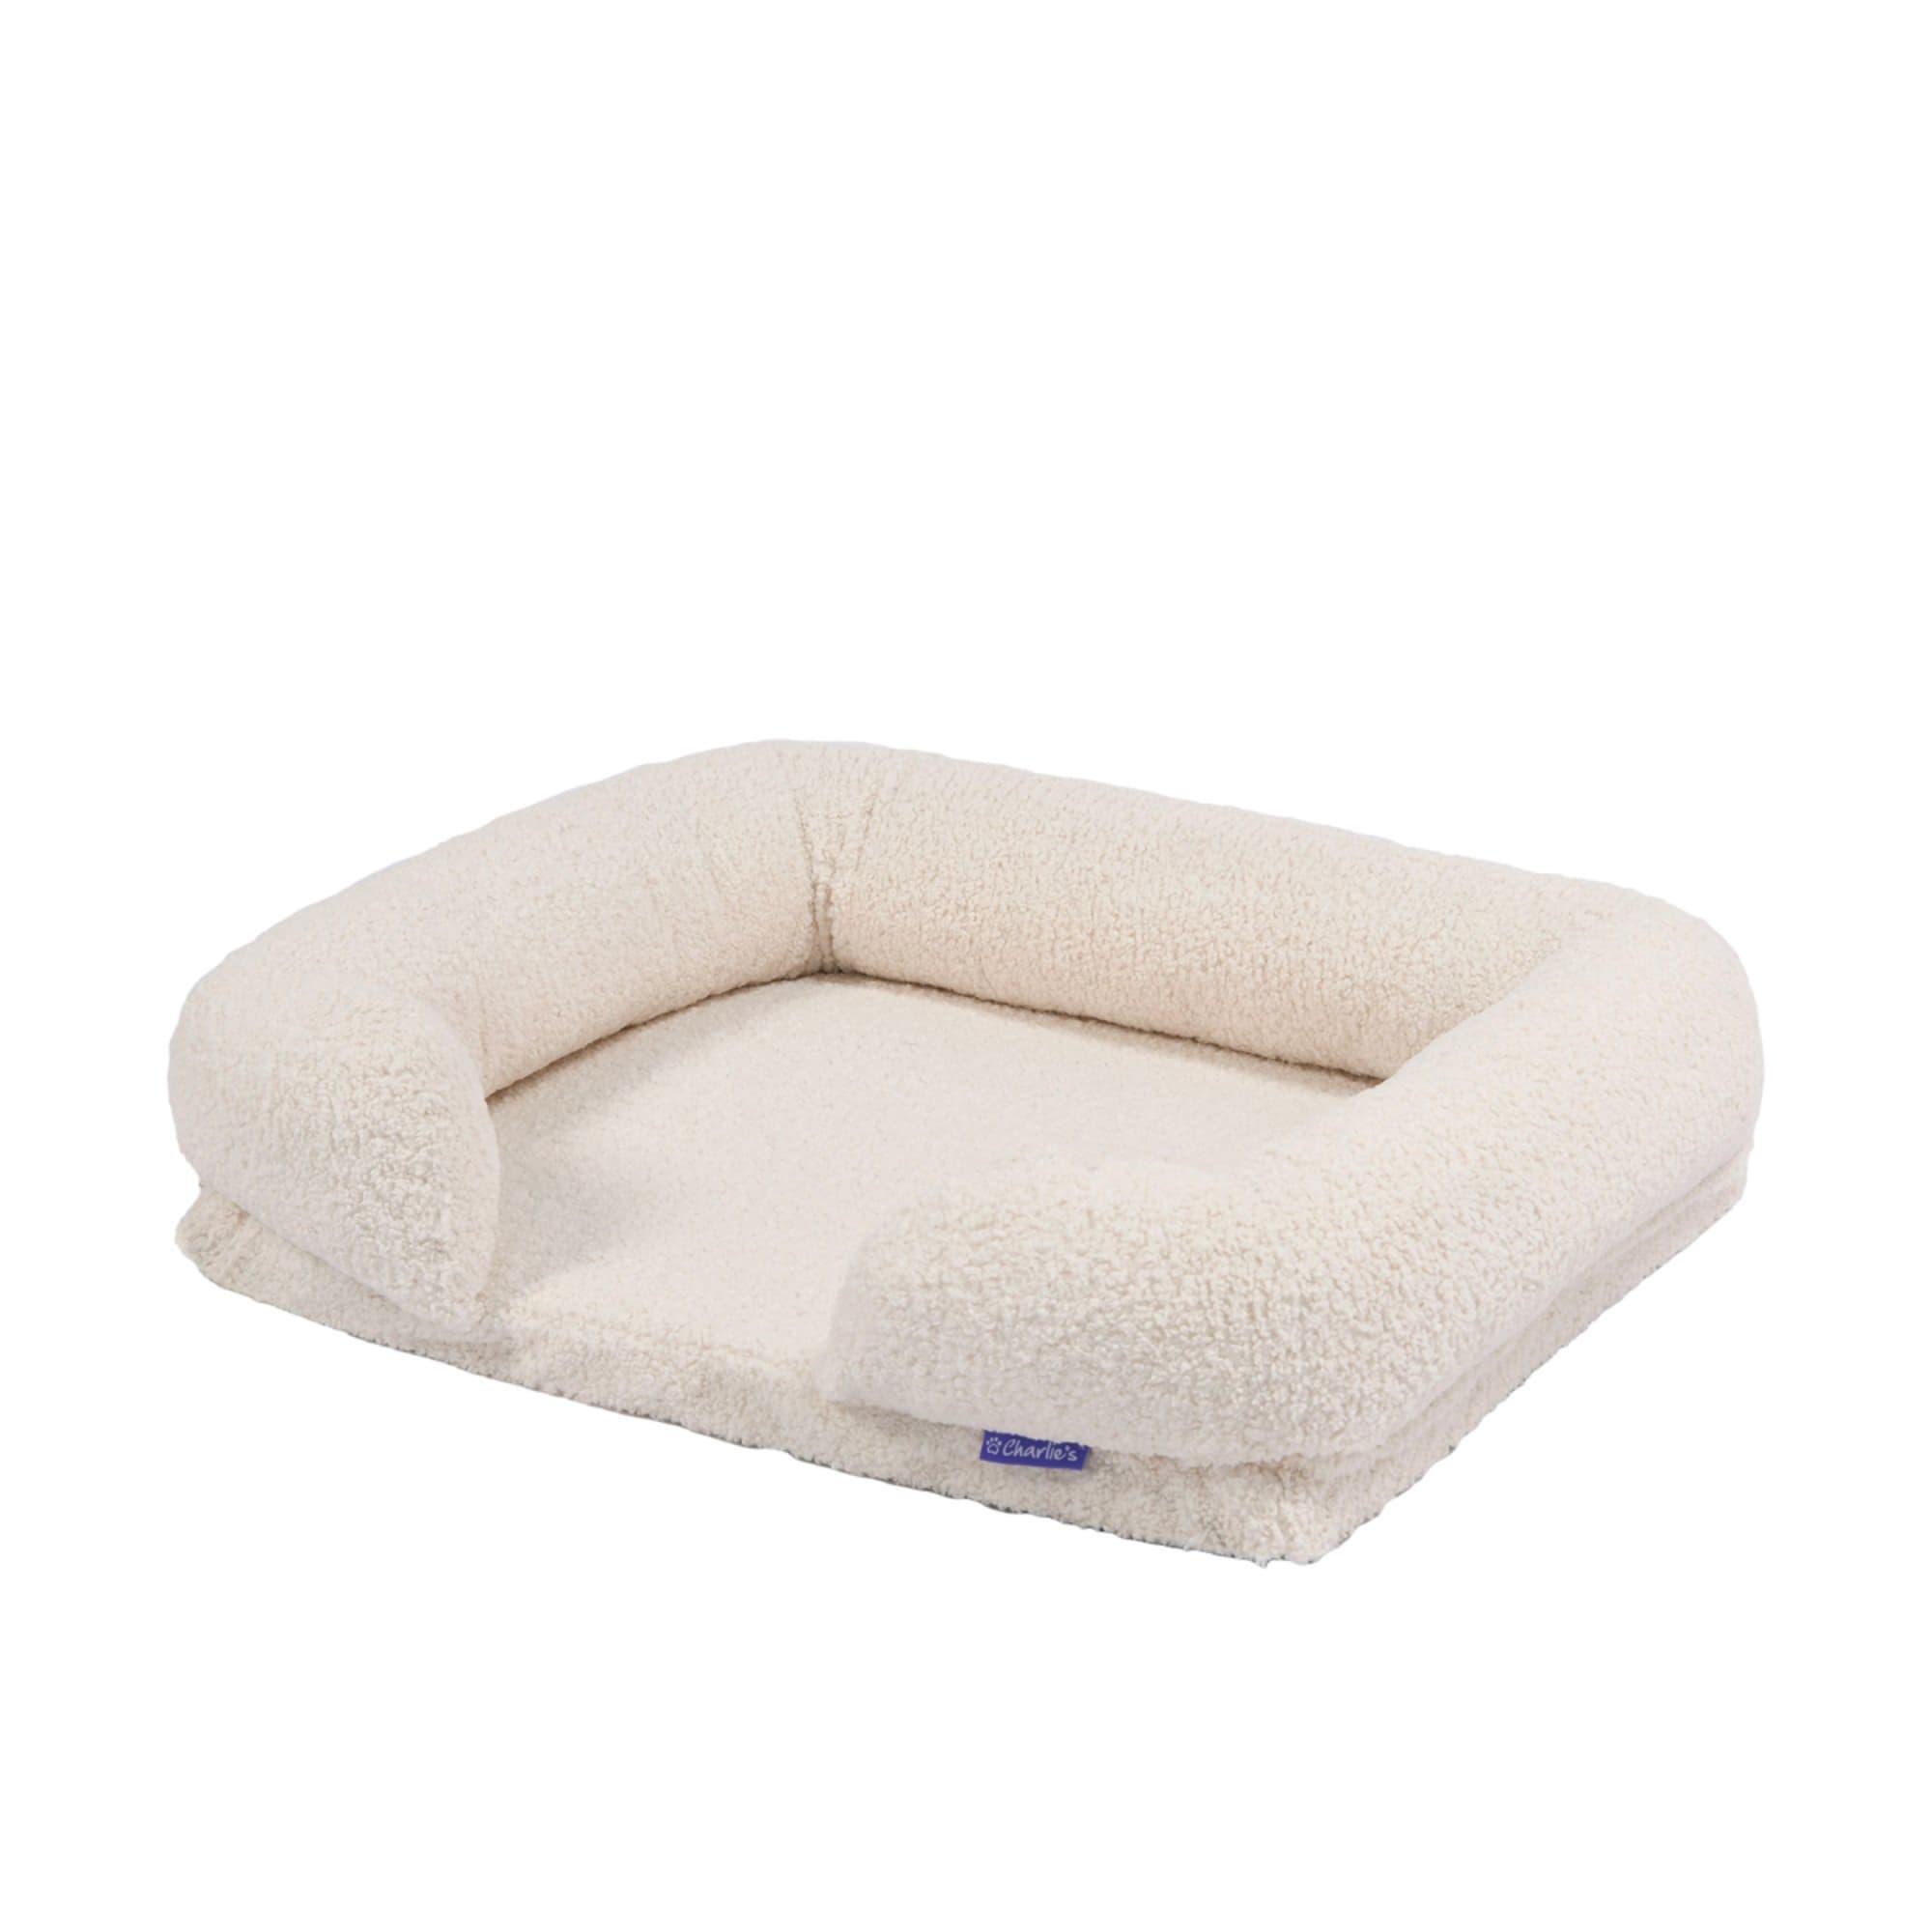 Charlie's Teddy Fleece Orthopedic Memory Foam Sofa Dog Bed Medium Cream Image 3